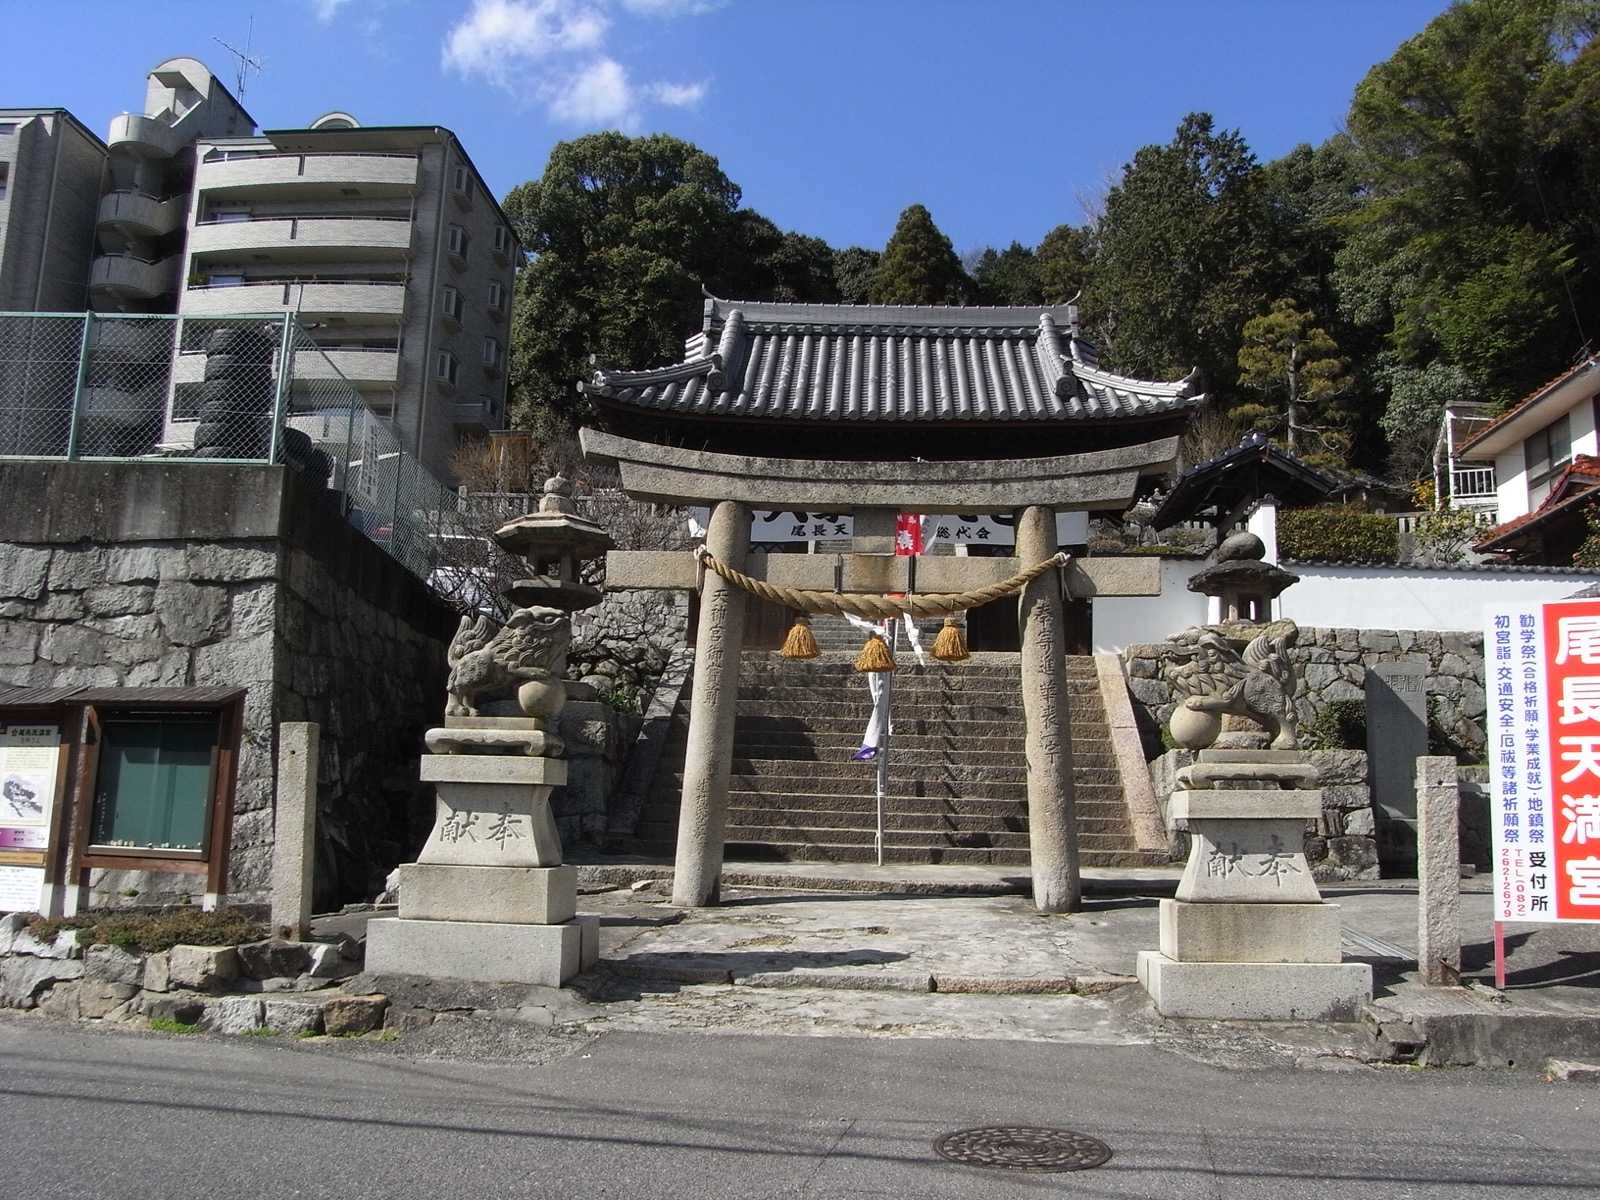 Photo of Onaga Tenmangu Shrine, Japan (尾長天満宮、隨神門 by Taisyo)